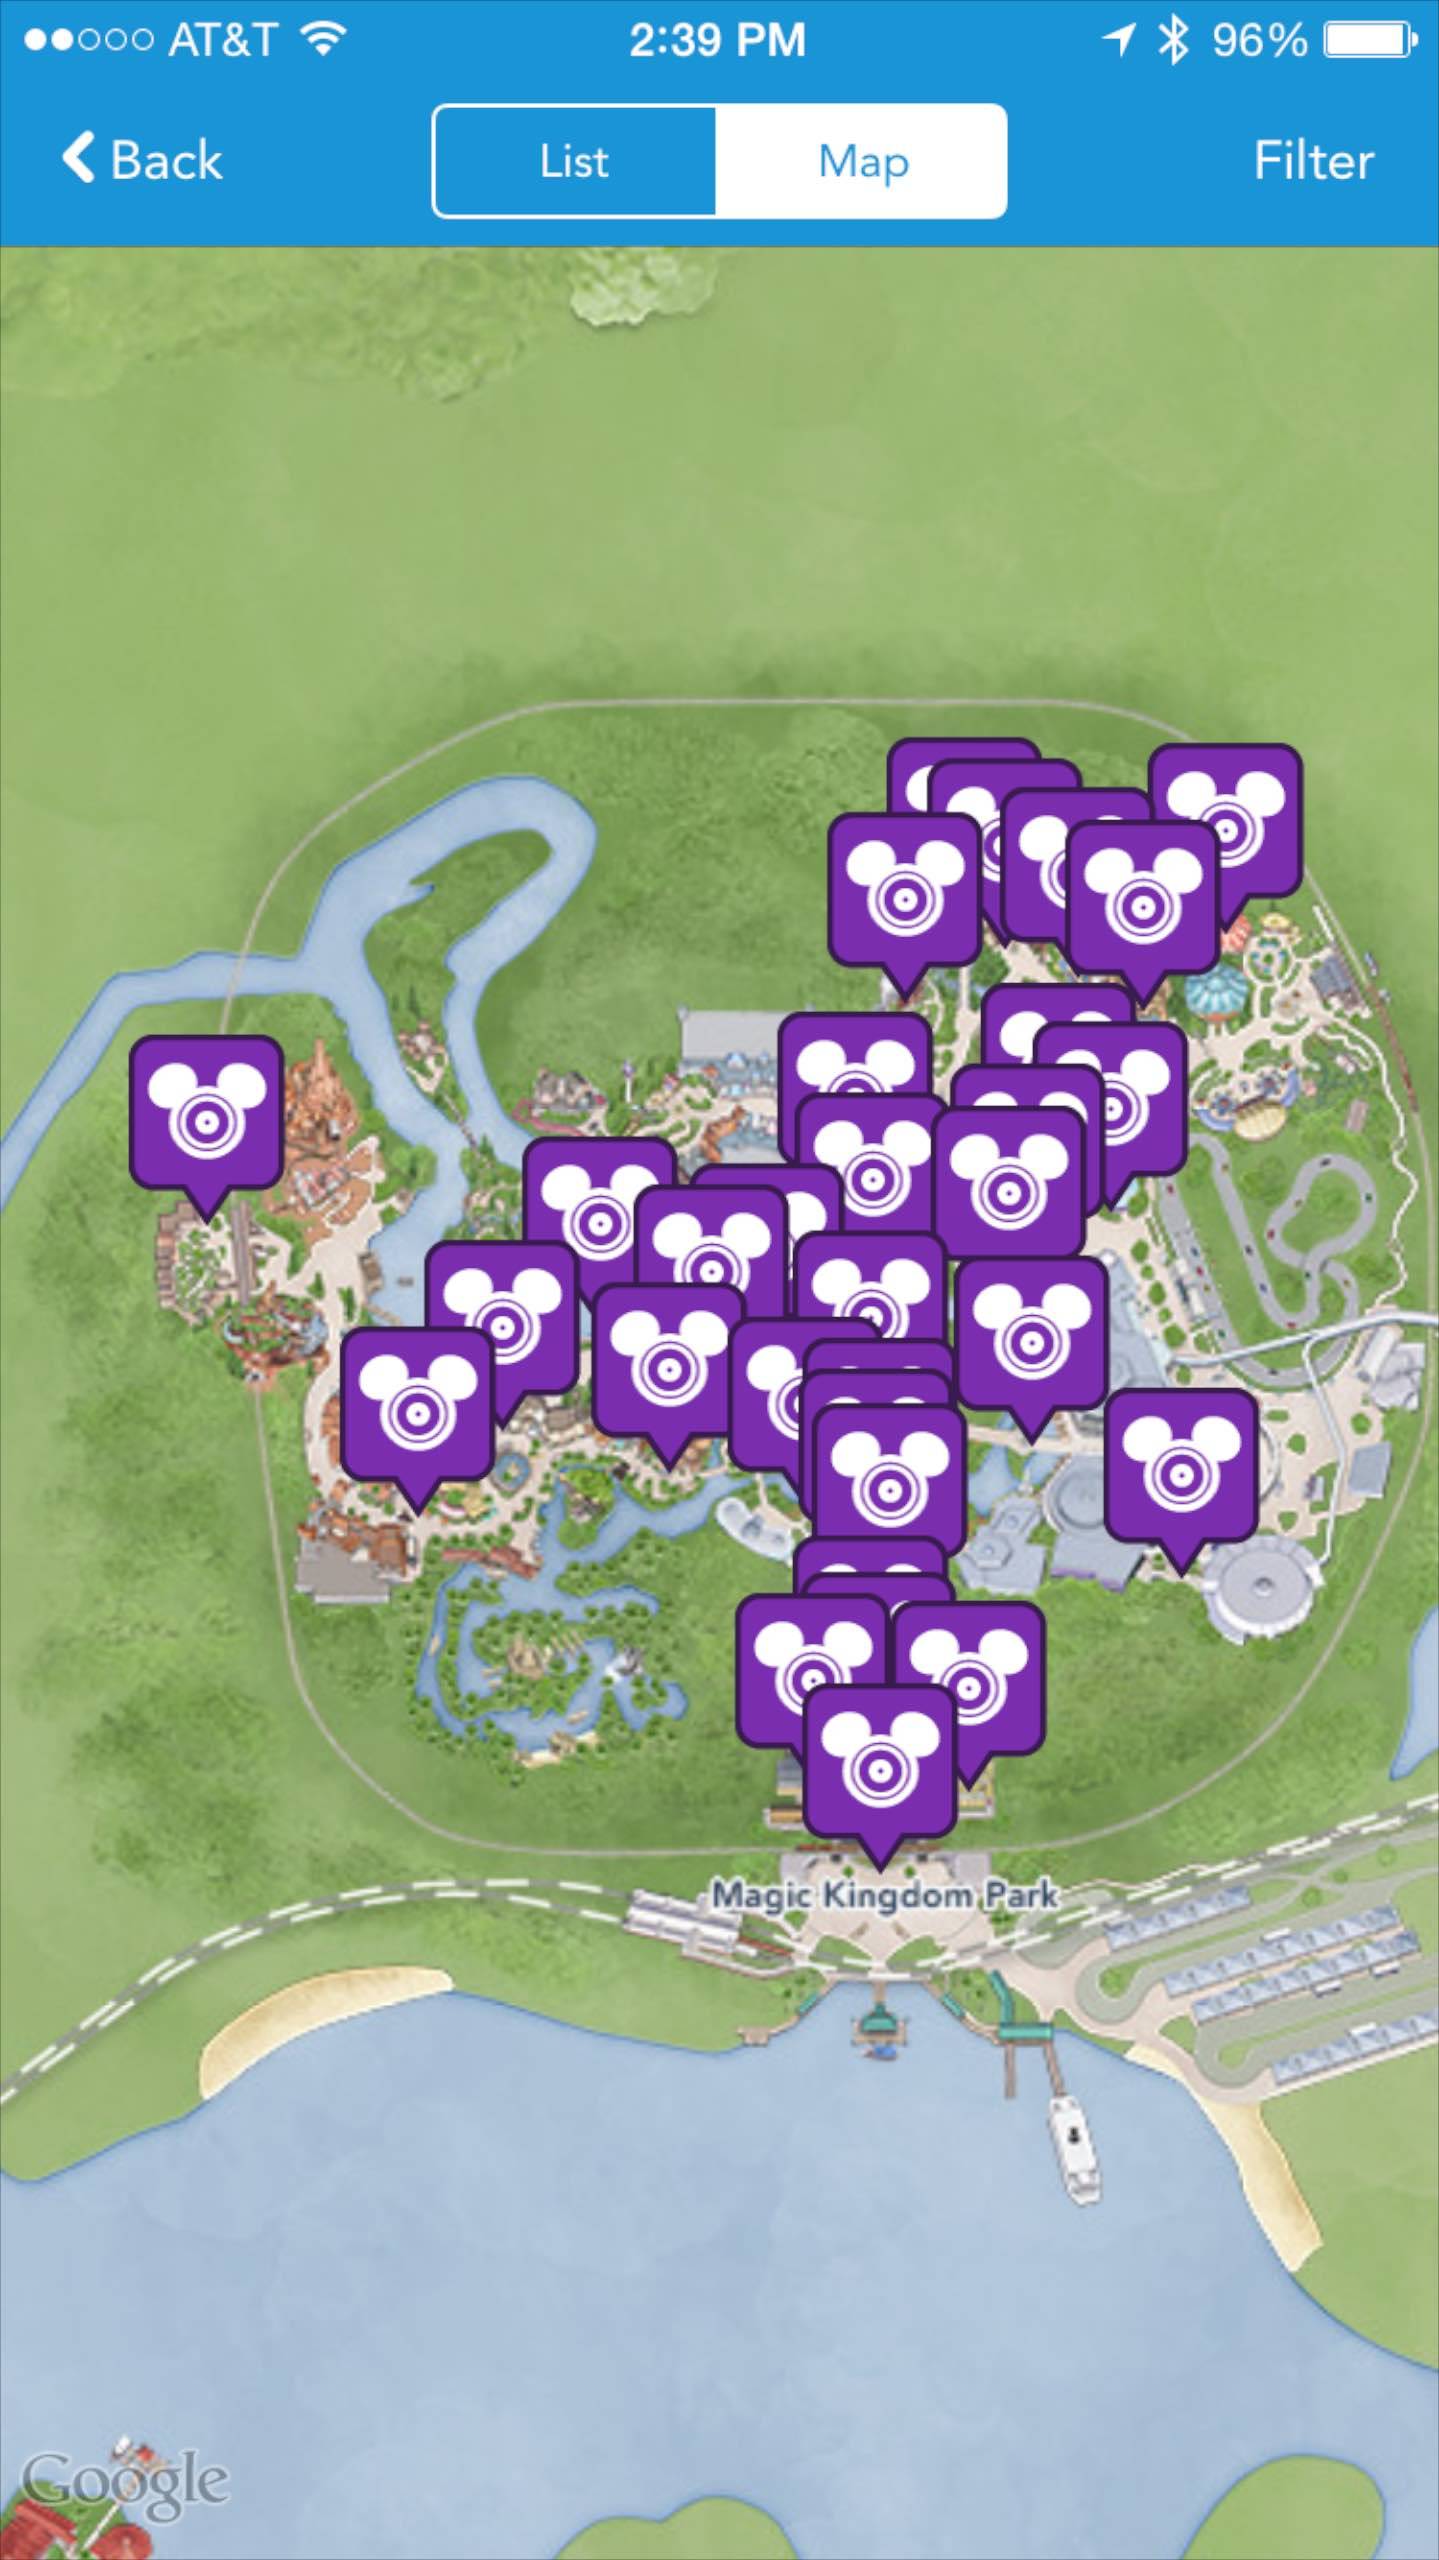 My Disney Experience PhotoPass screenshots